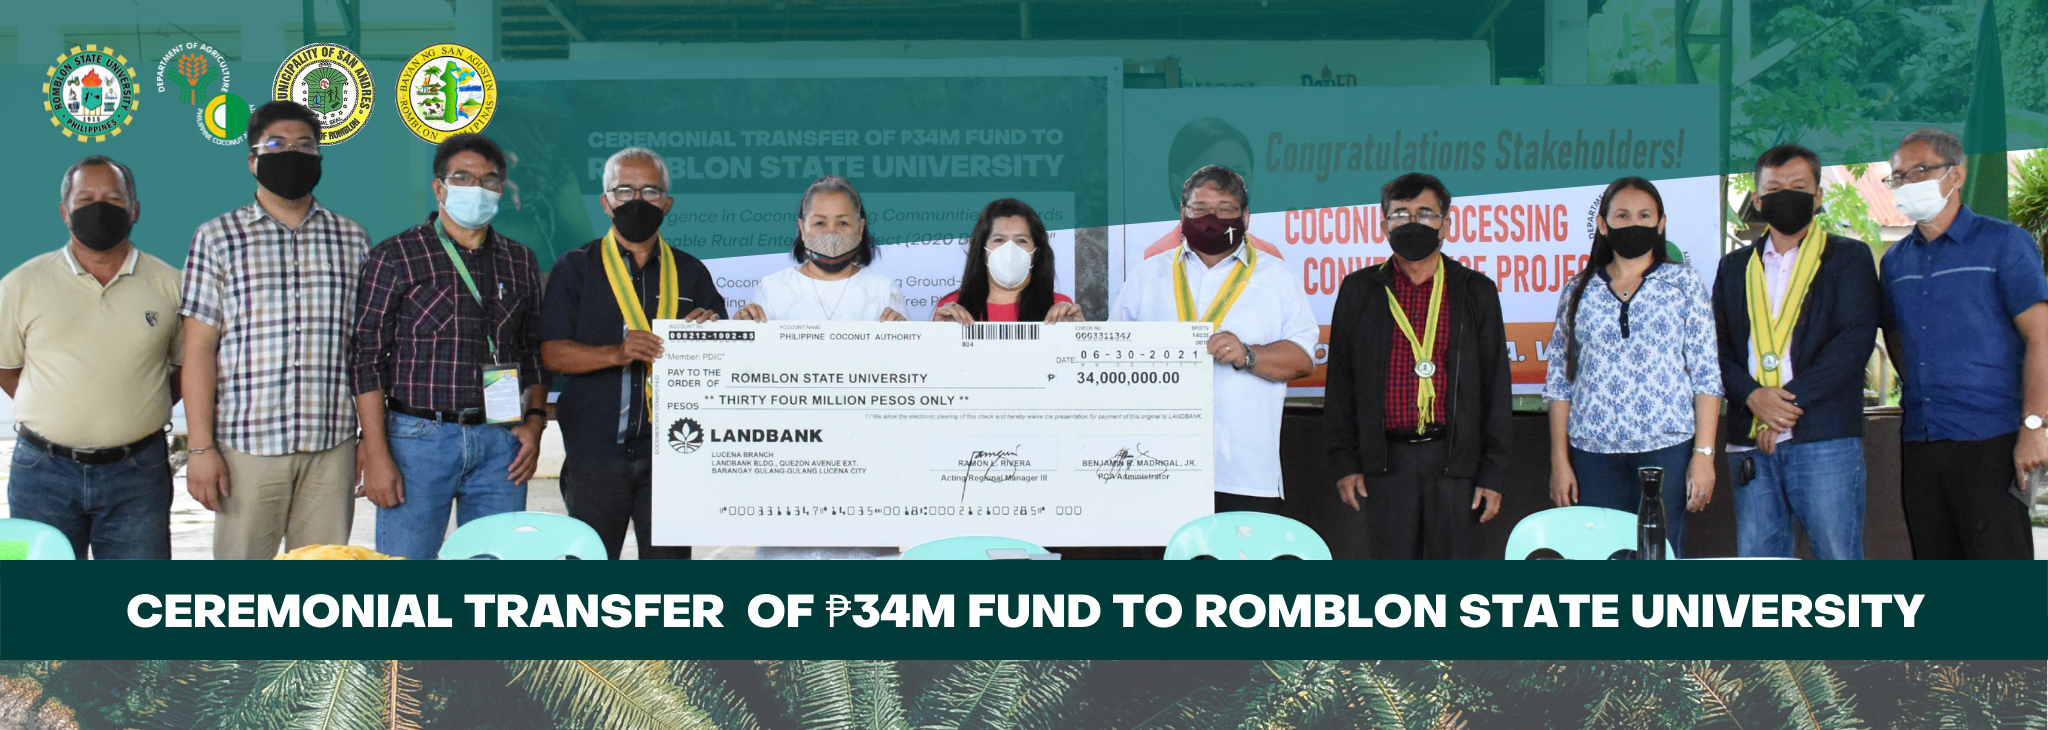 Ceremonial Transfer of Fund to RSU - Romblon State University